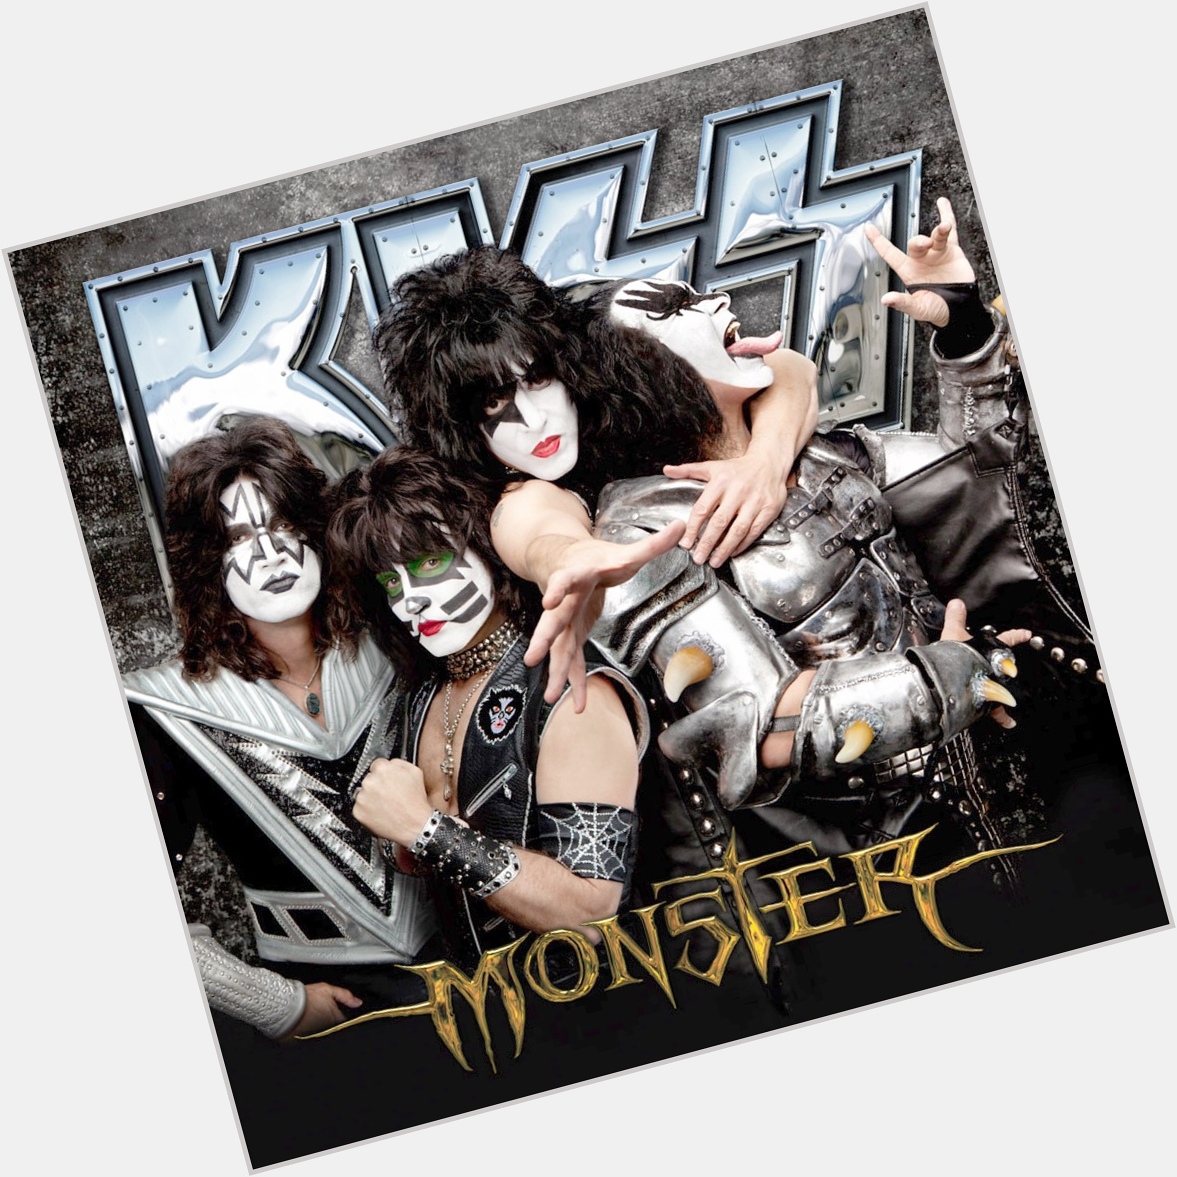  Hell Or Hallelujah
from Monster [Bonus Track]
by Kiss

Happy Birthday, Eric Singer 